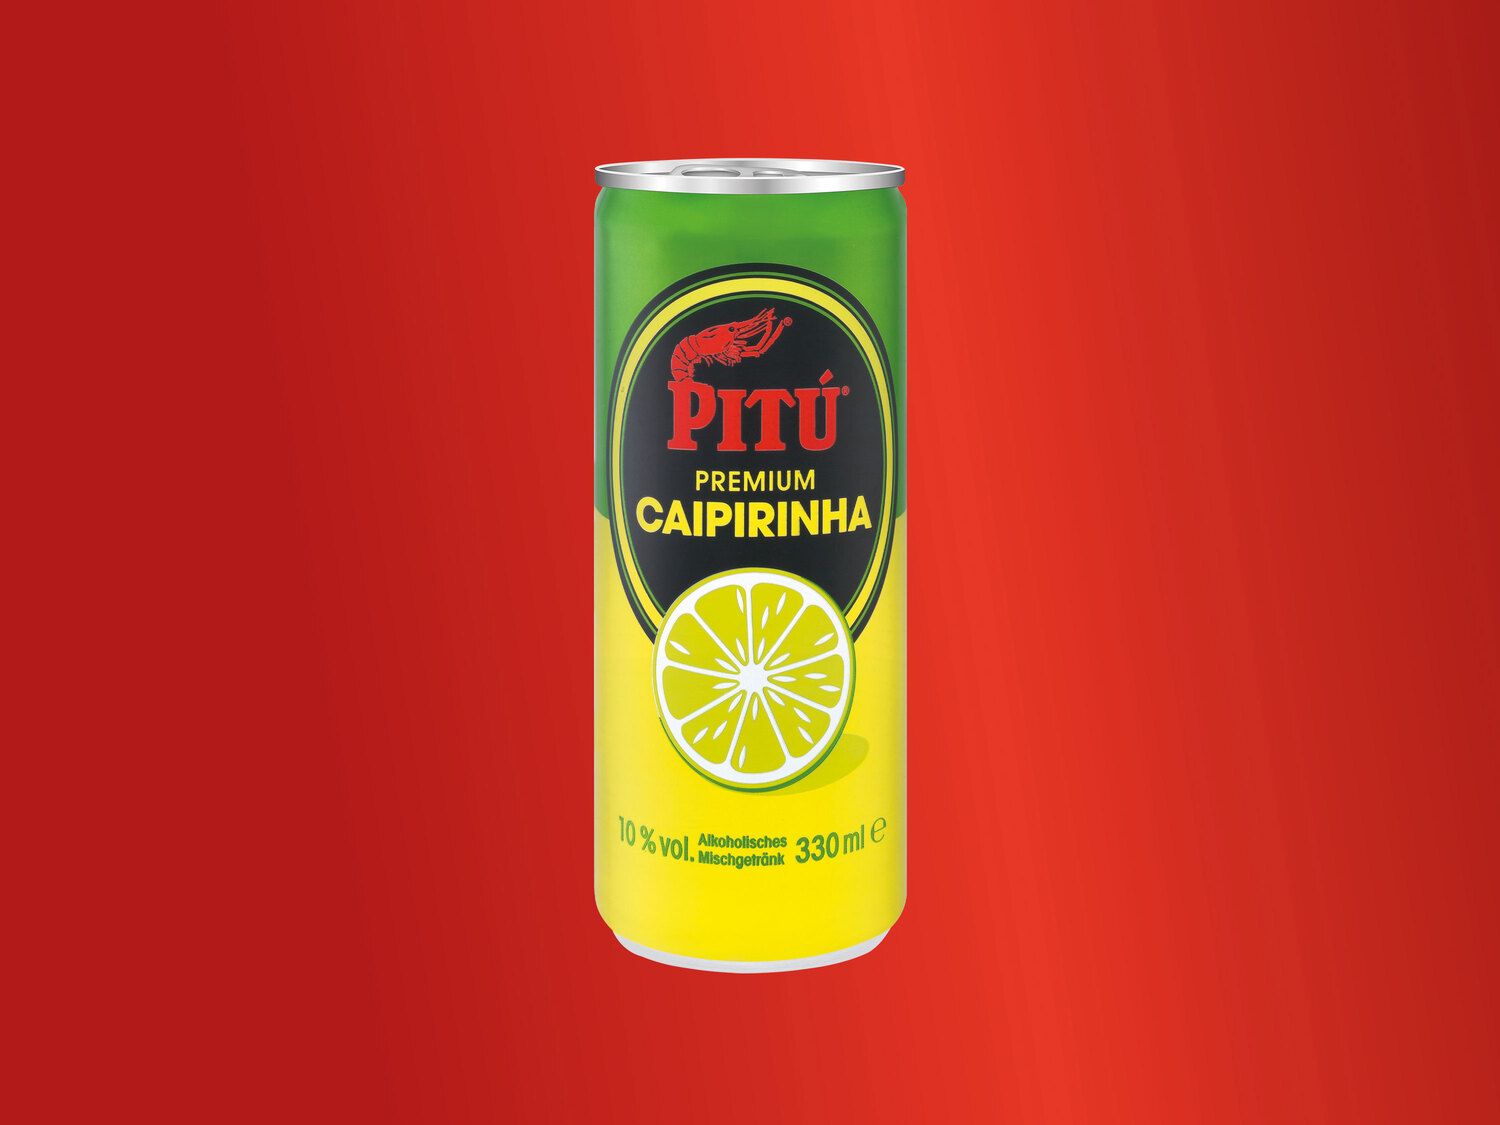 Premium Caipirinha - Deutschland Pitú Lidl